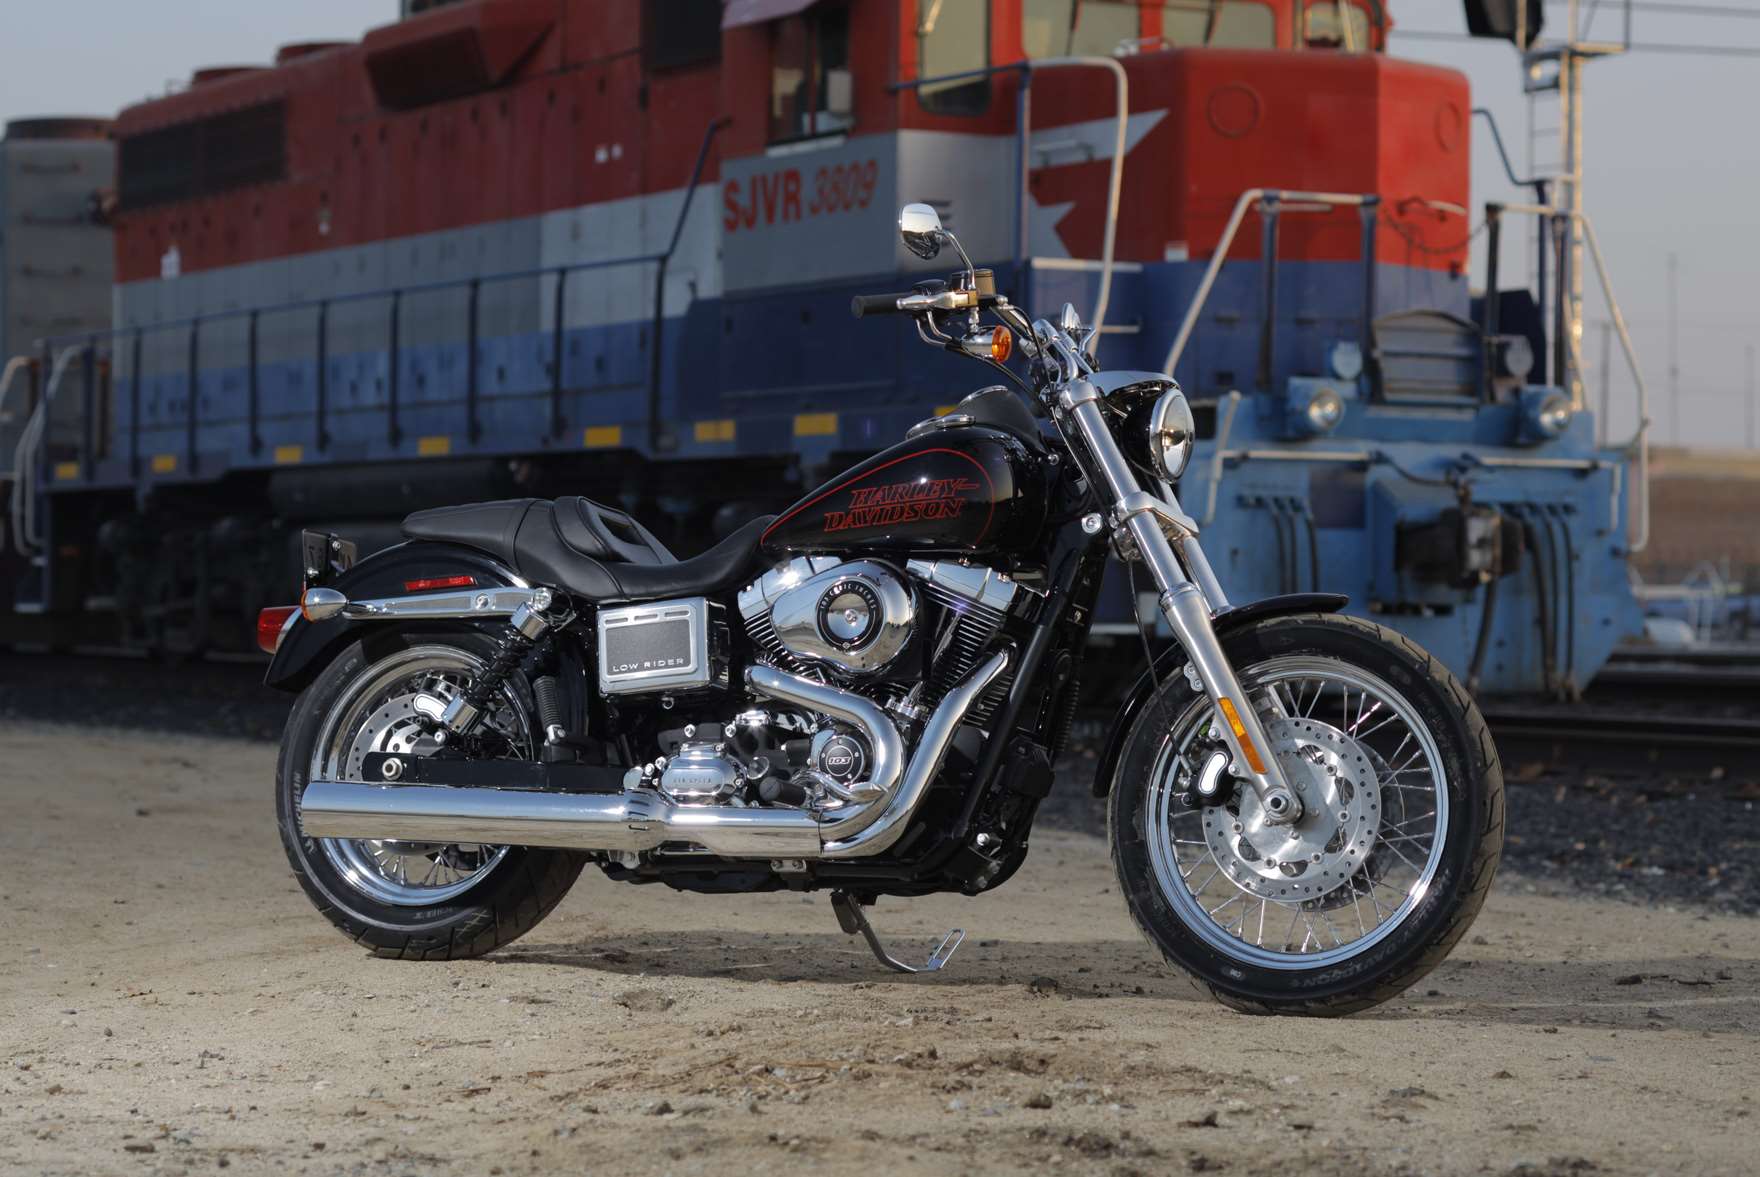 A new Harley-Davidson